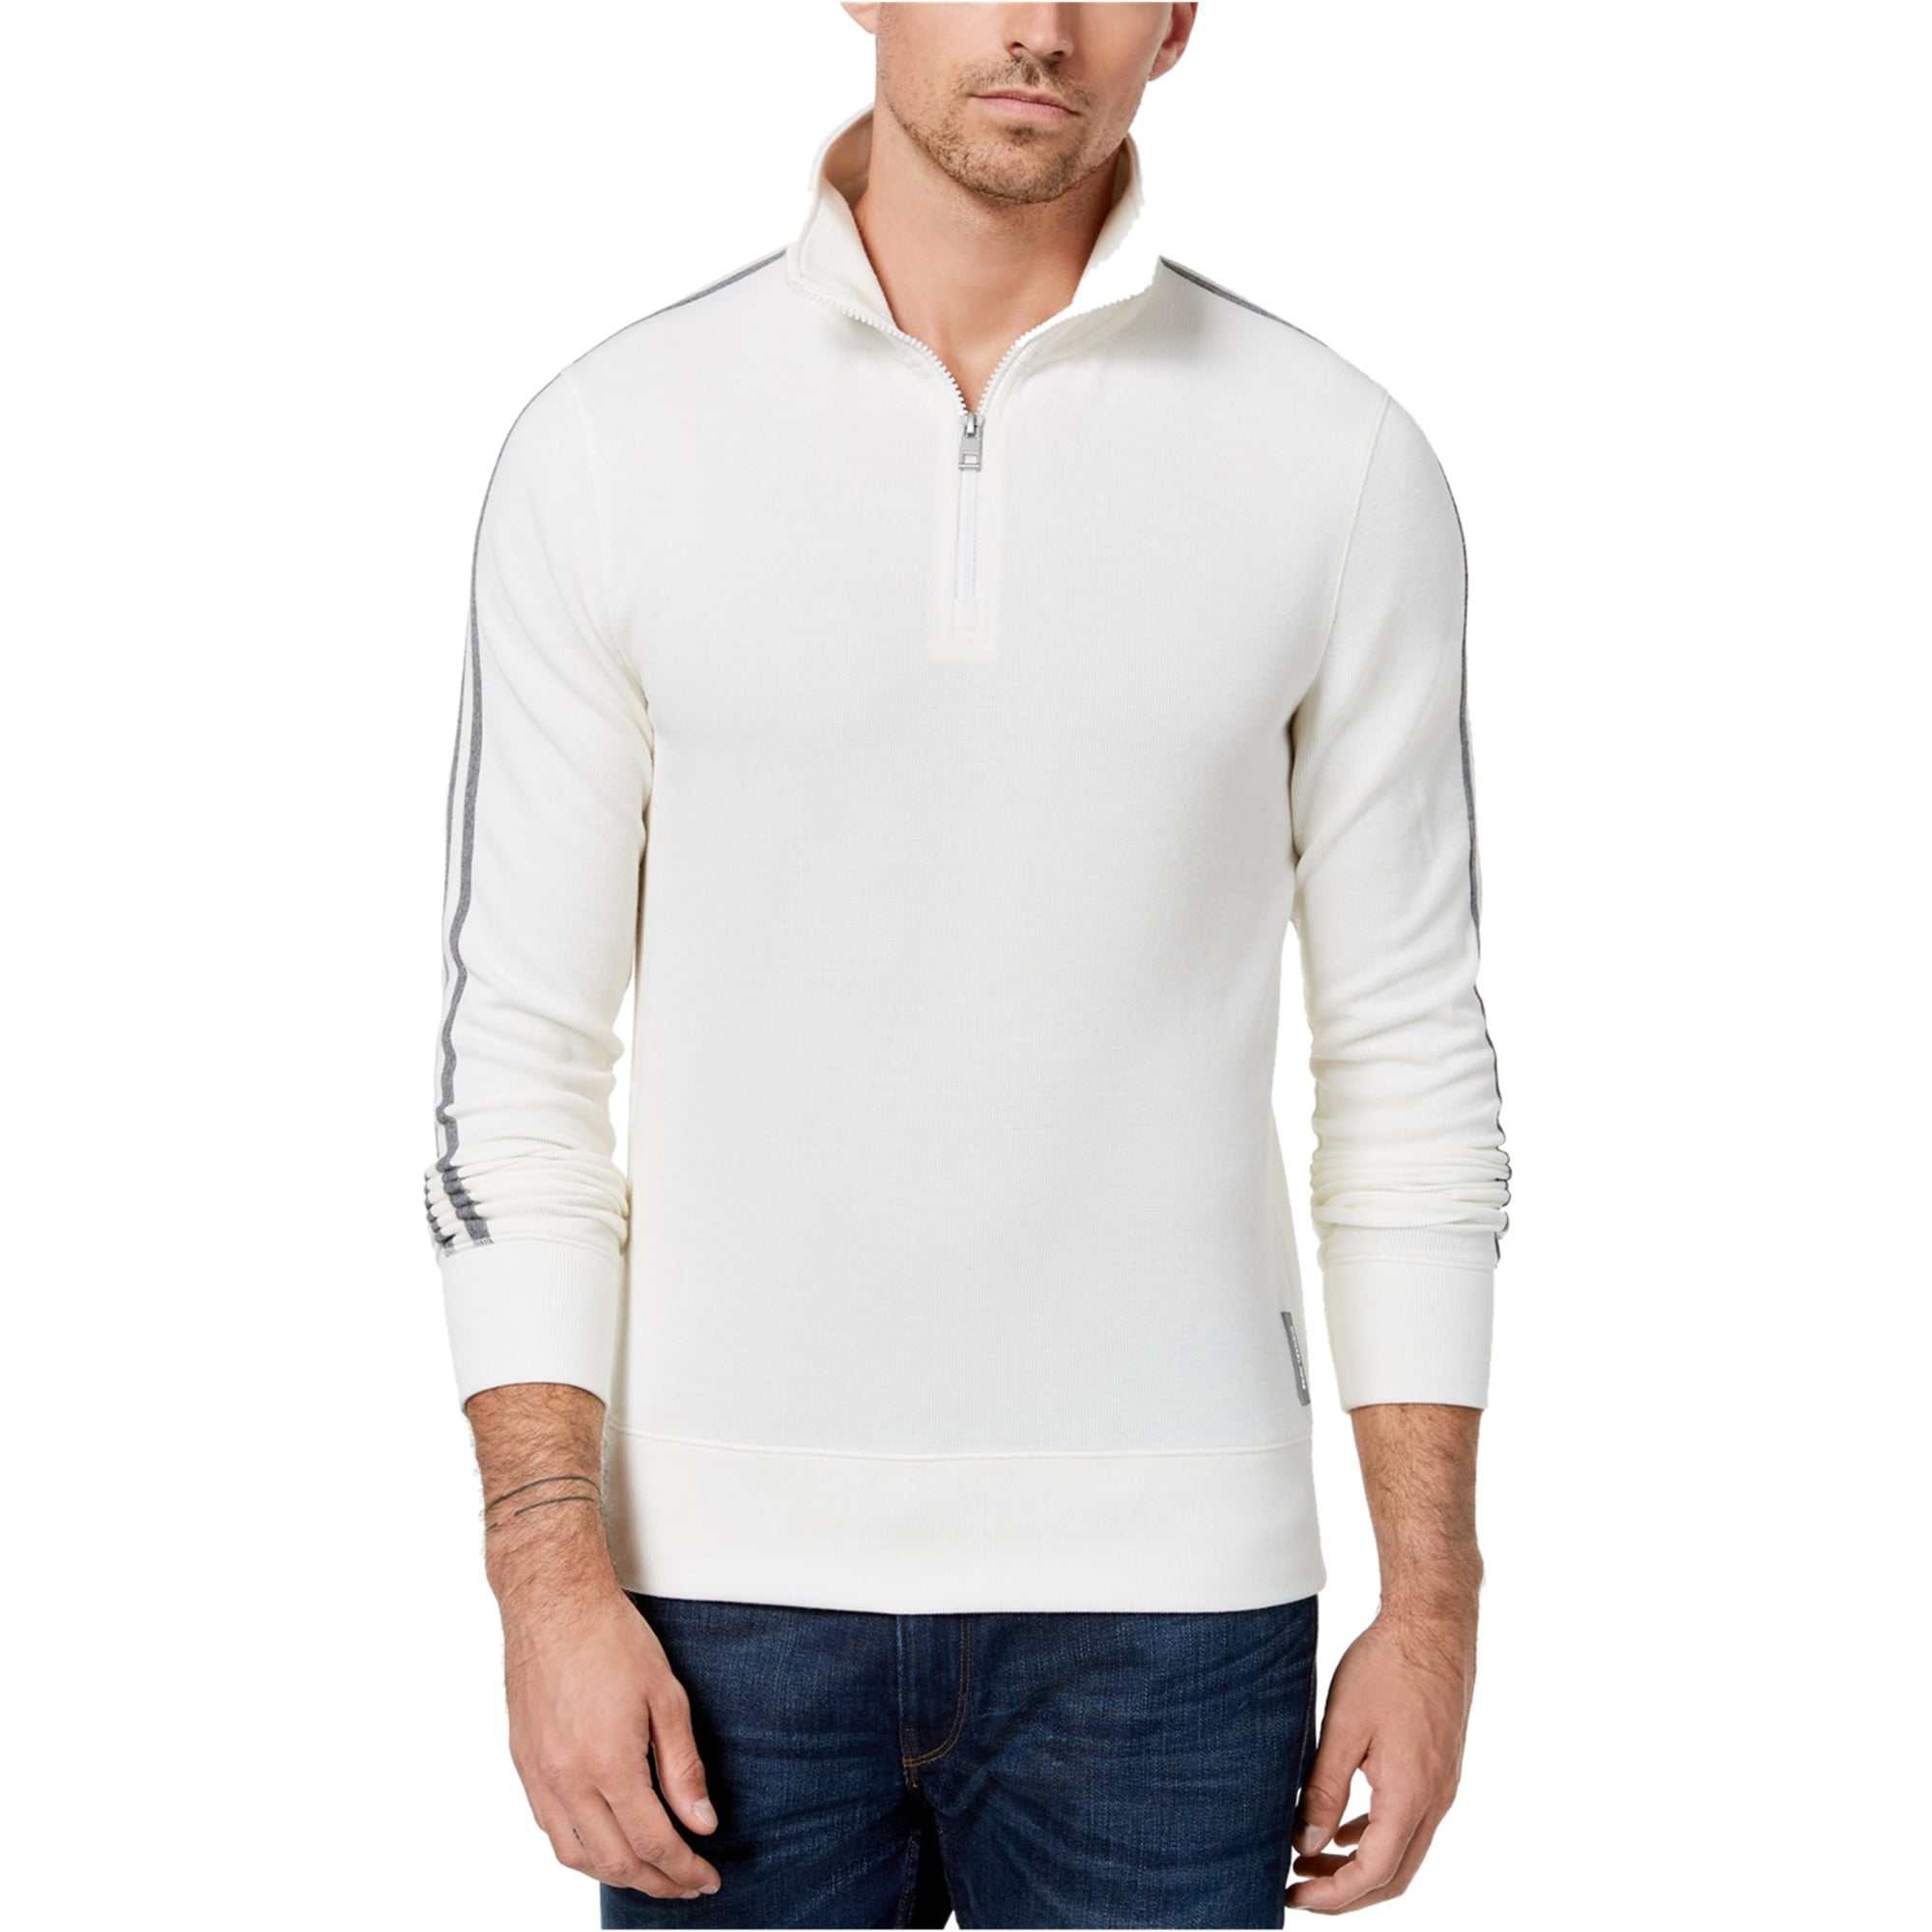 Michael Kors - Michael Kors Mens Quarter Zip Sweatshirt - Walmart.com ...